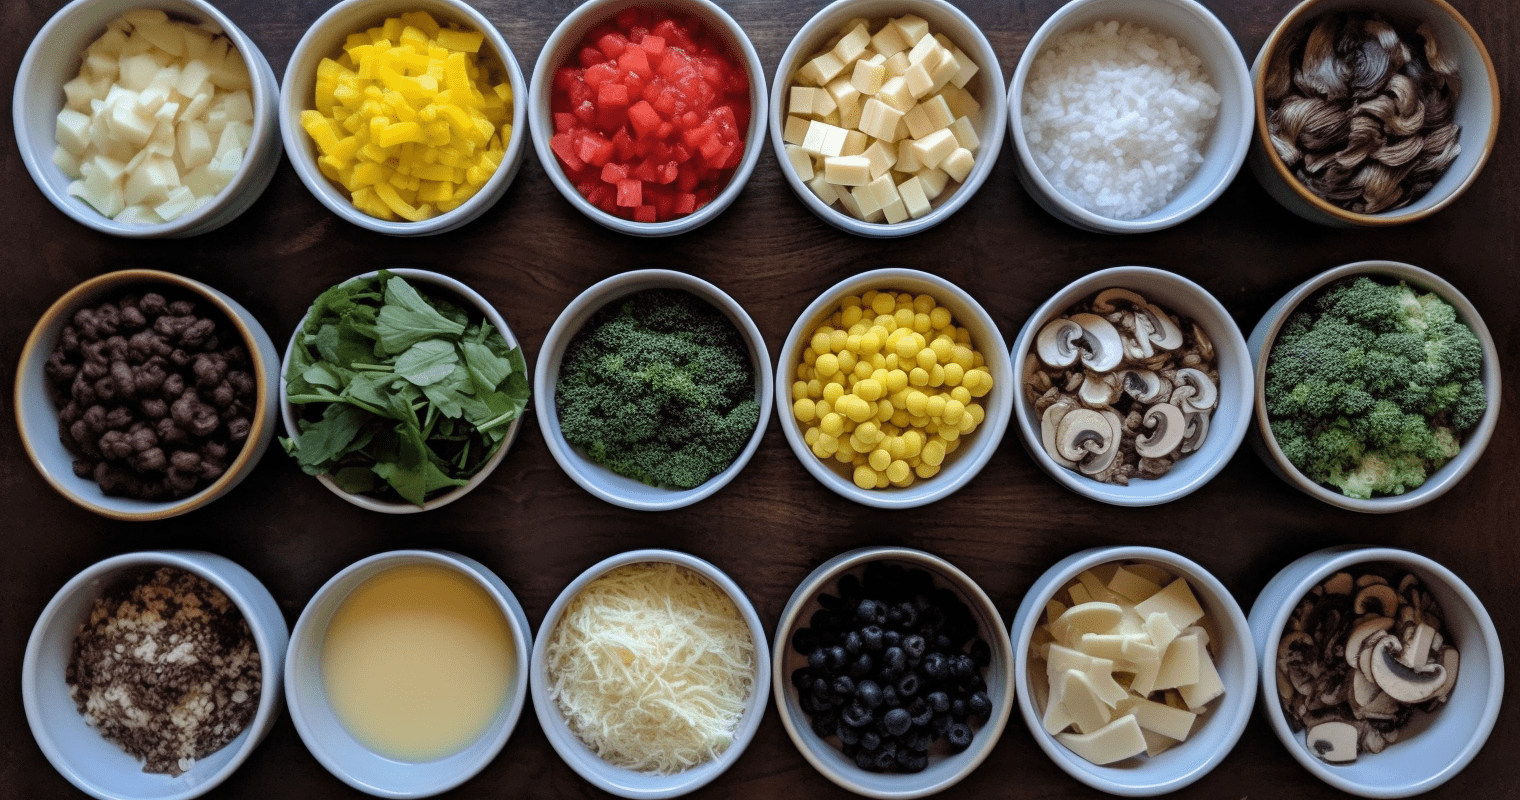 Dutch Oven Breakfast Casserole Ingredients